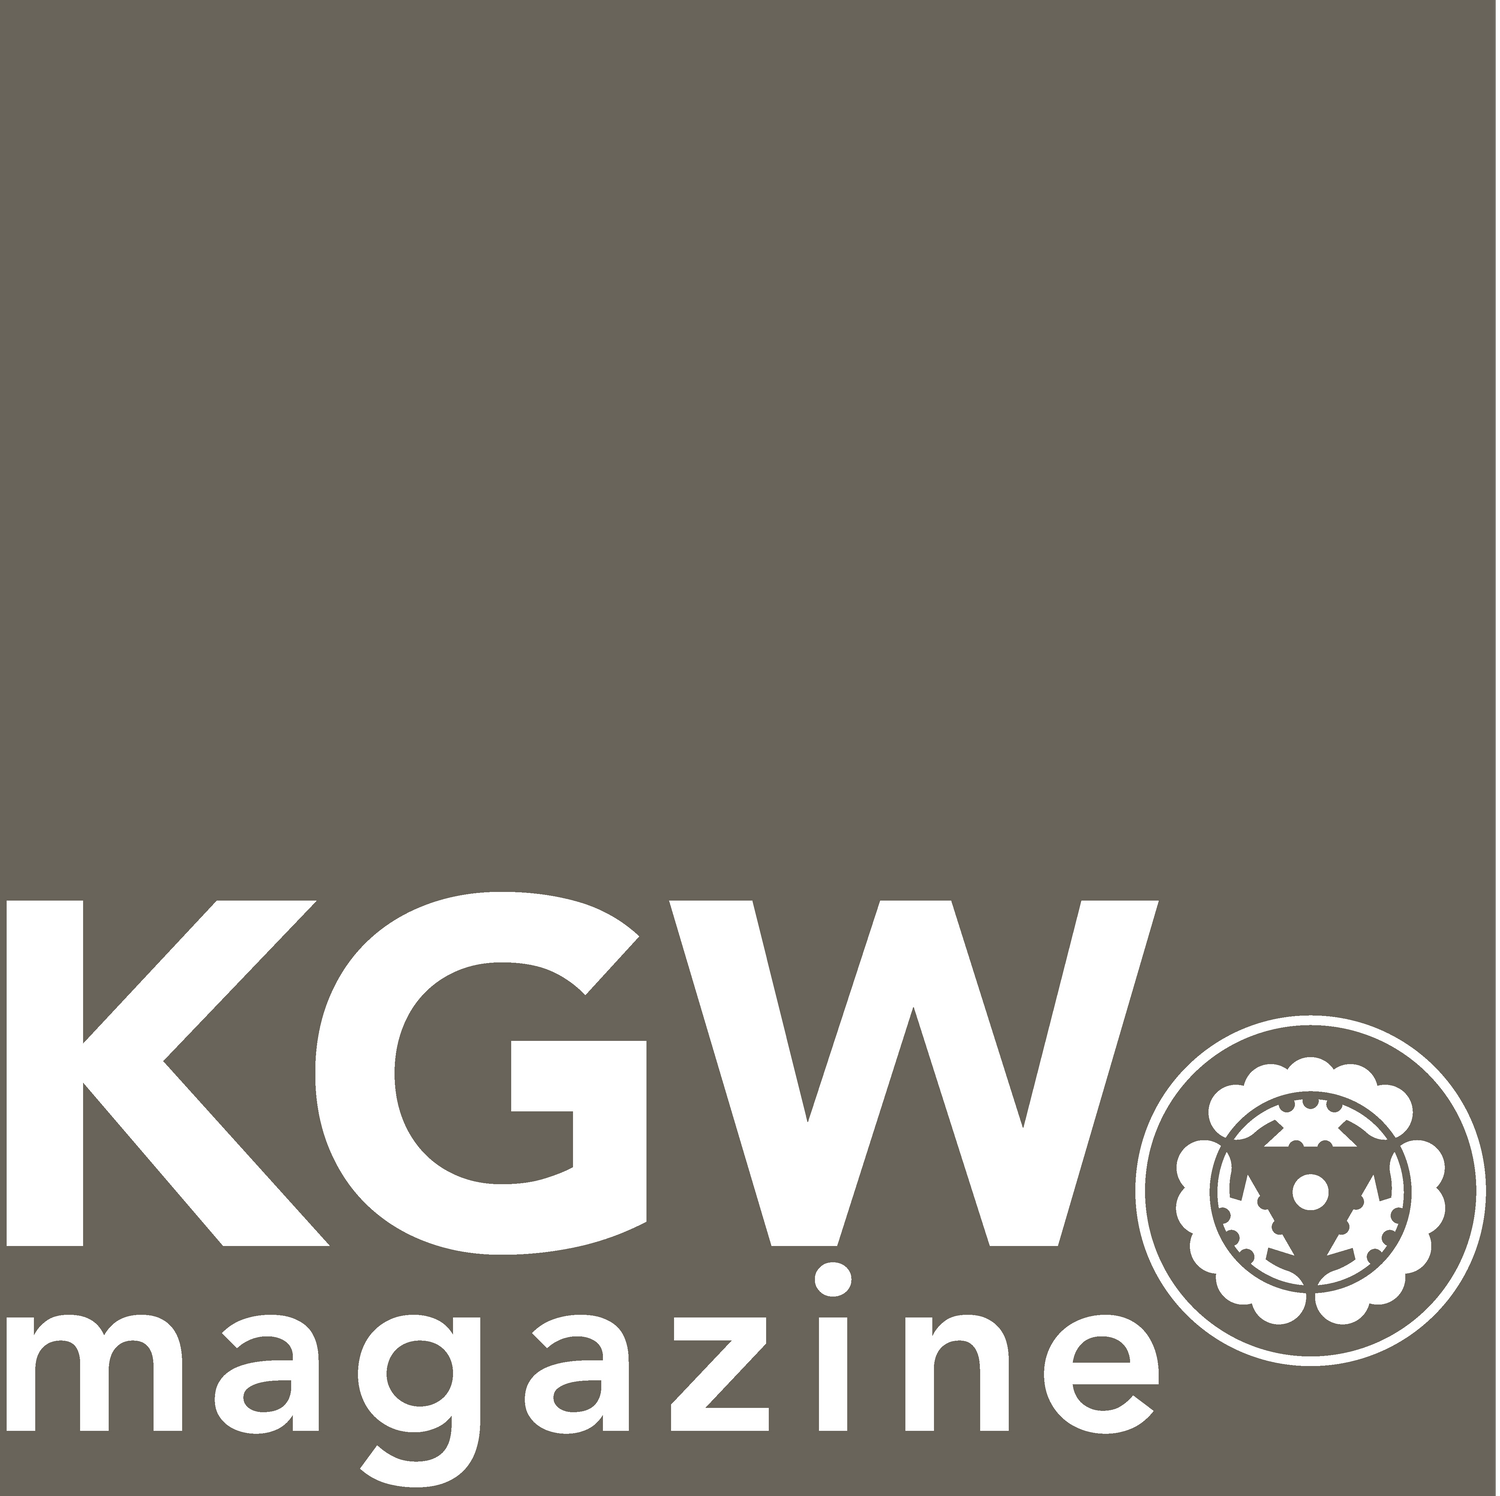 KGW magazine